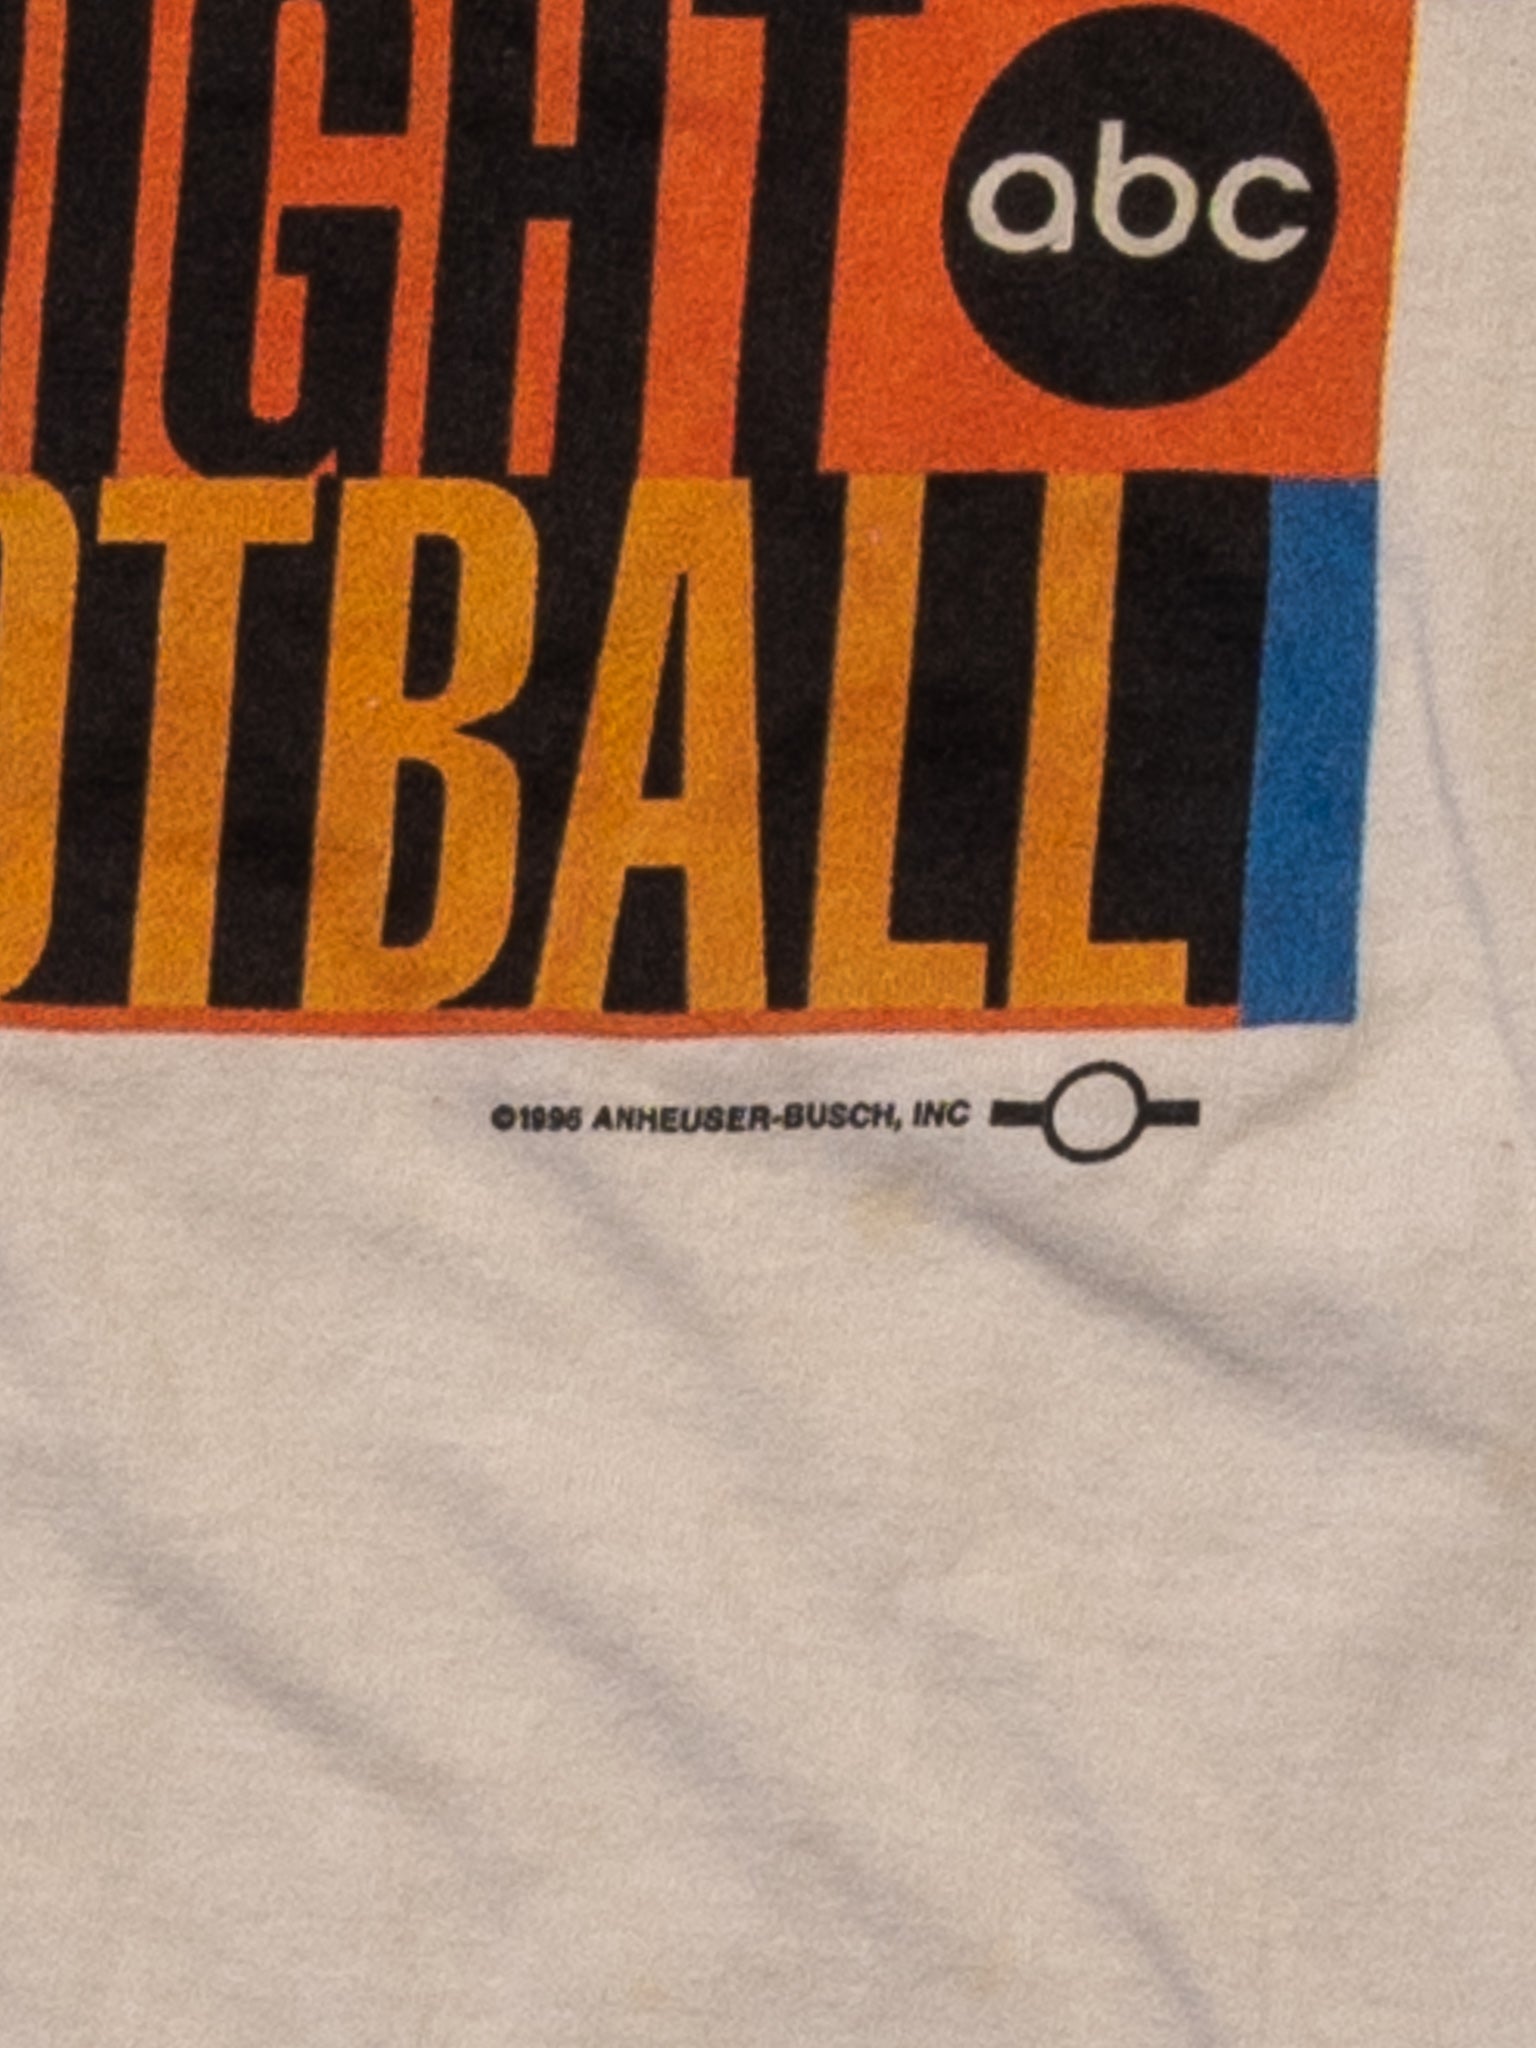 Vintage '96 Monday Night Football ABC Single Stitch Tee (M)